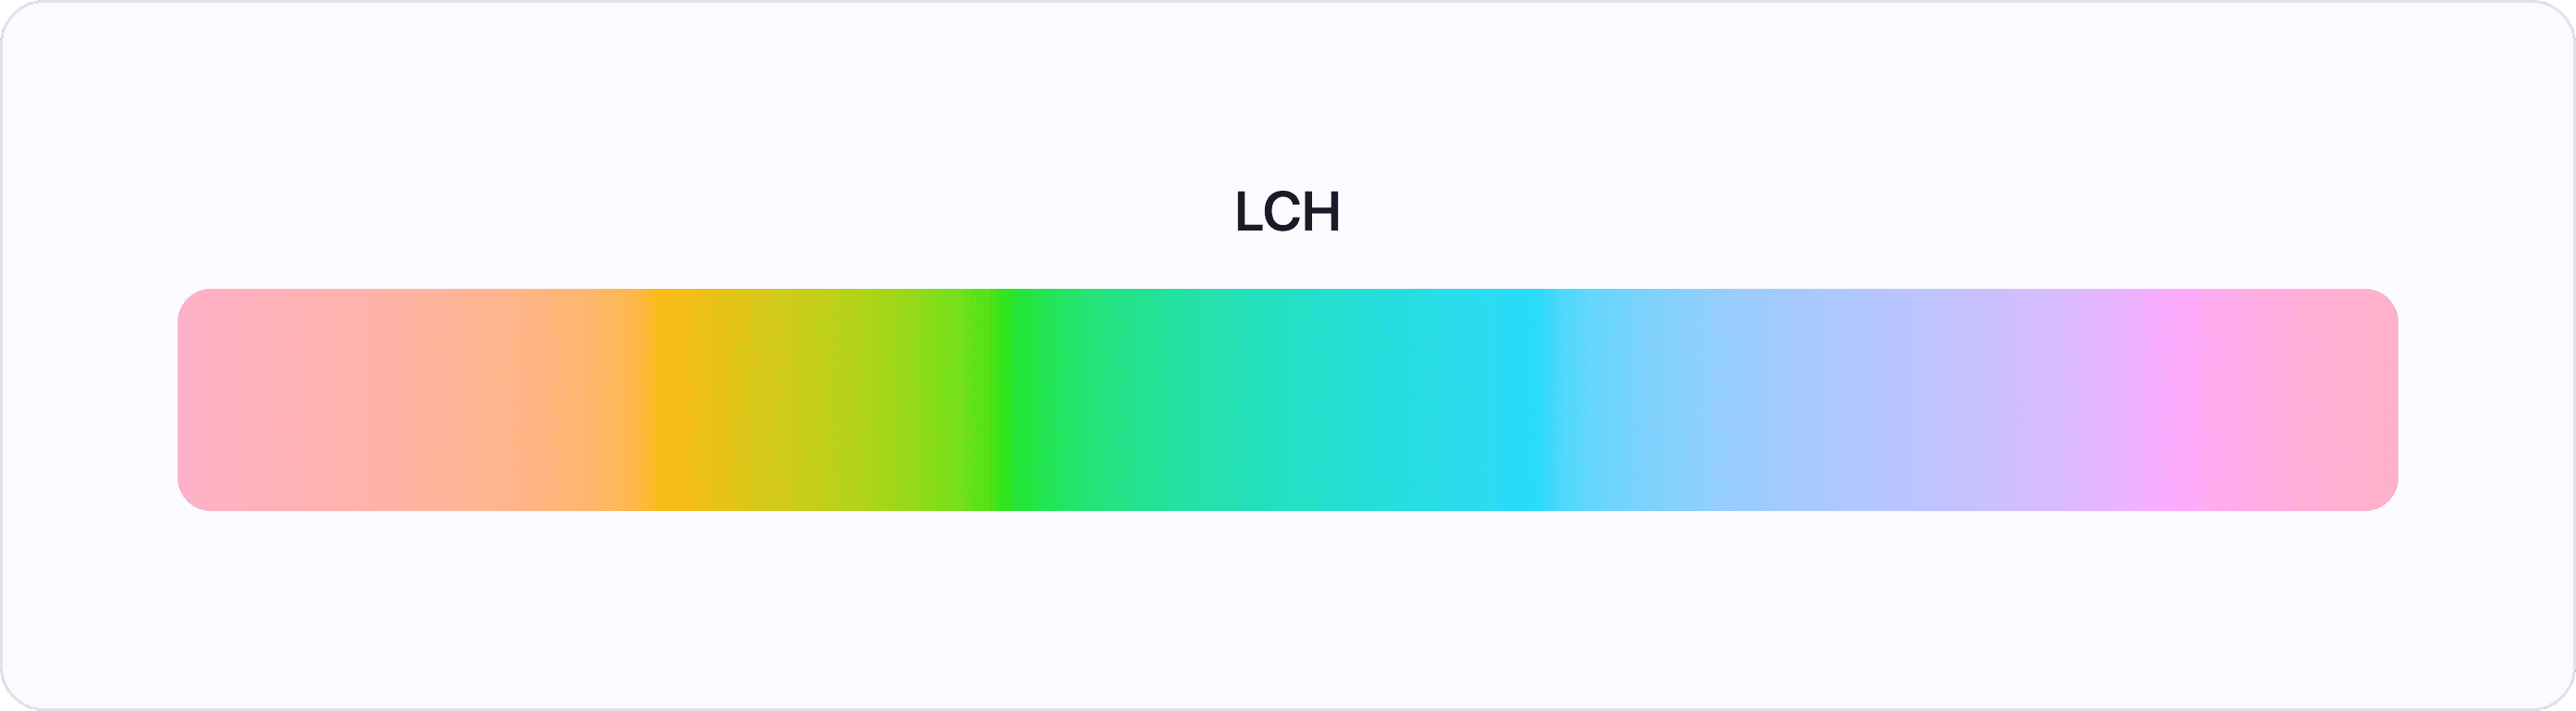 OKLCH hues with same lightness and chroma